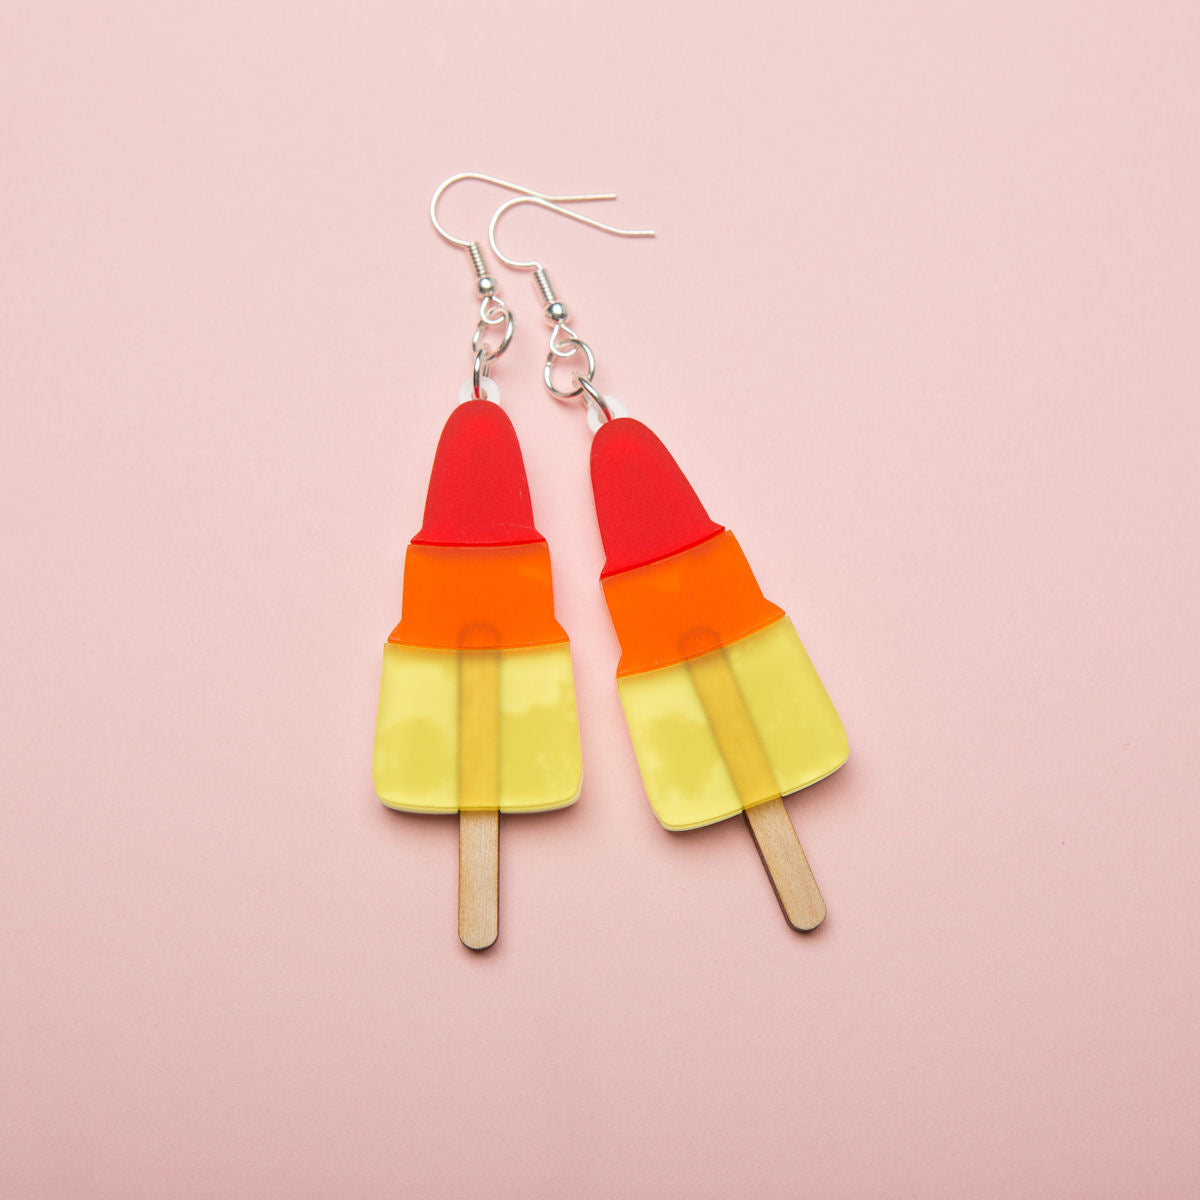 Sugar & Vice Rocket Lolly Earrings social media